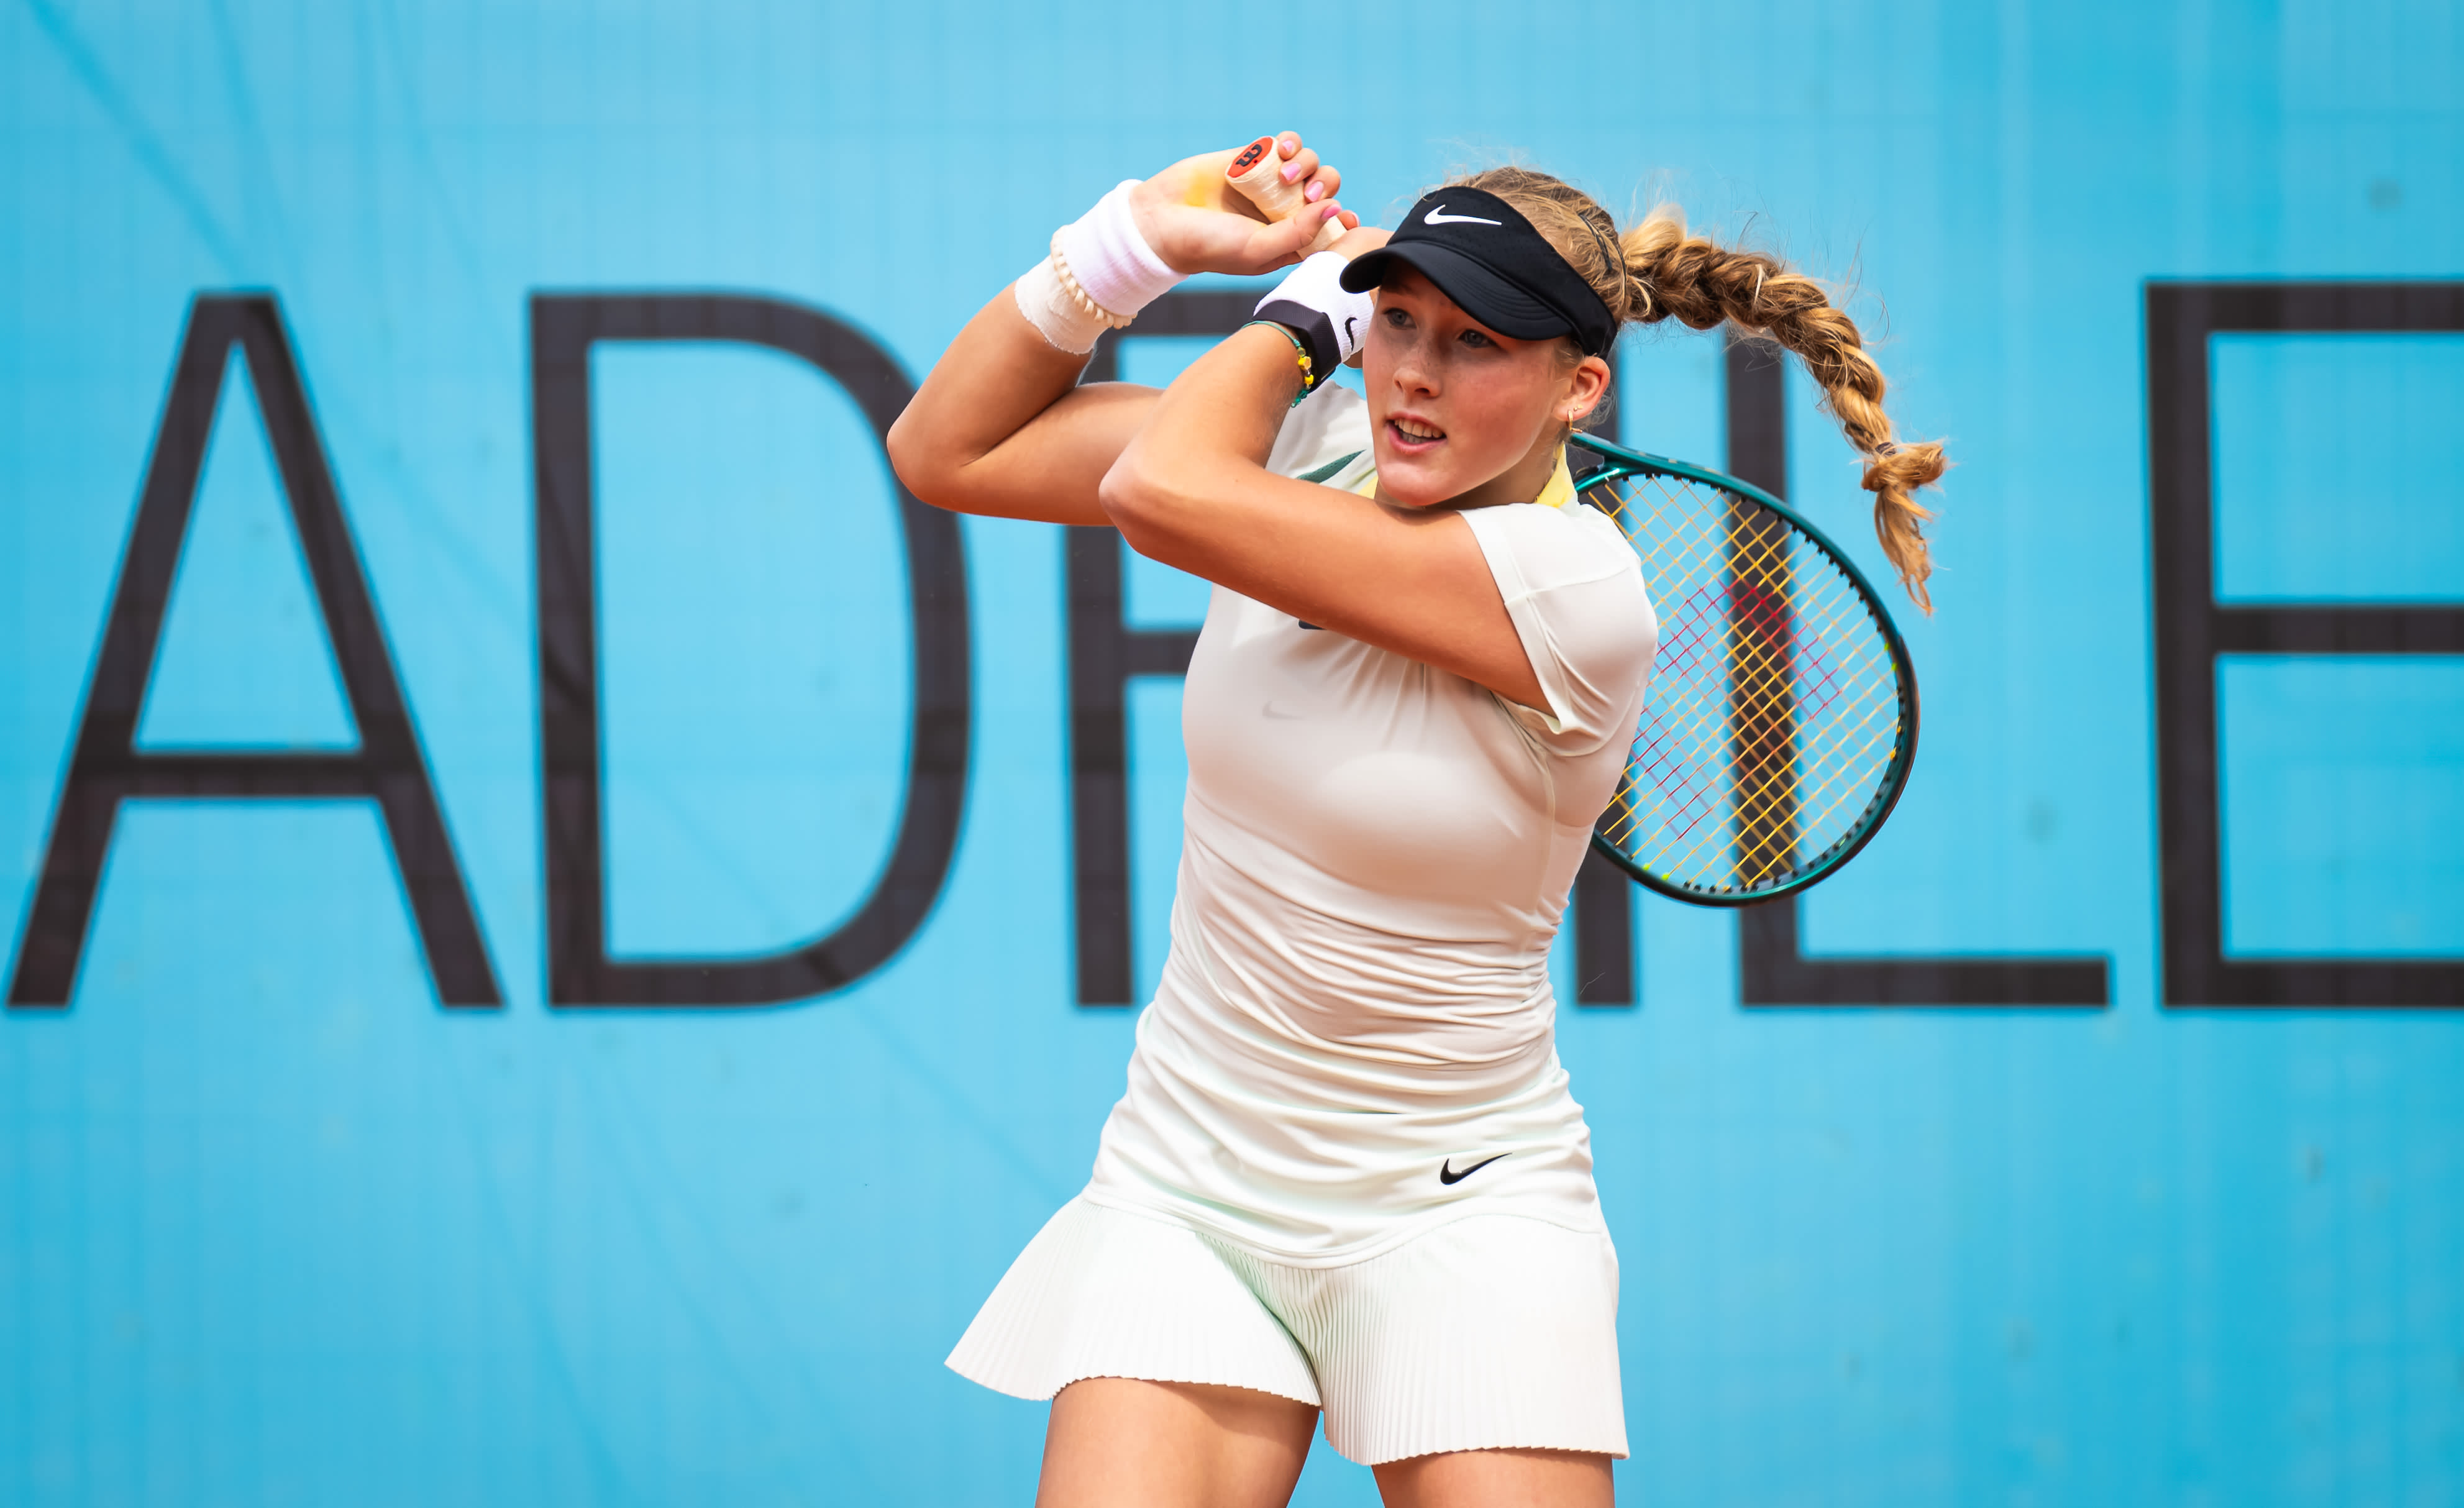 In her last match as a 16-year-old, Mirra Andreeva beats Wimbledon champion Marketa Vondrousova in Madrid | Tennis.com